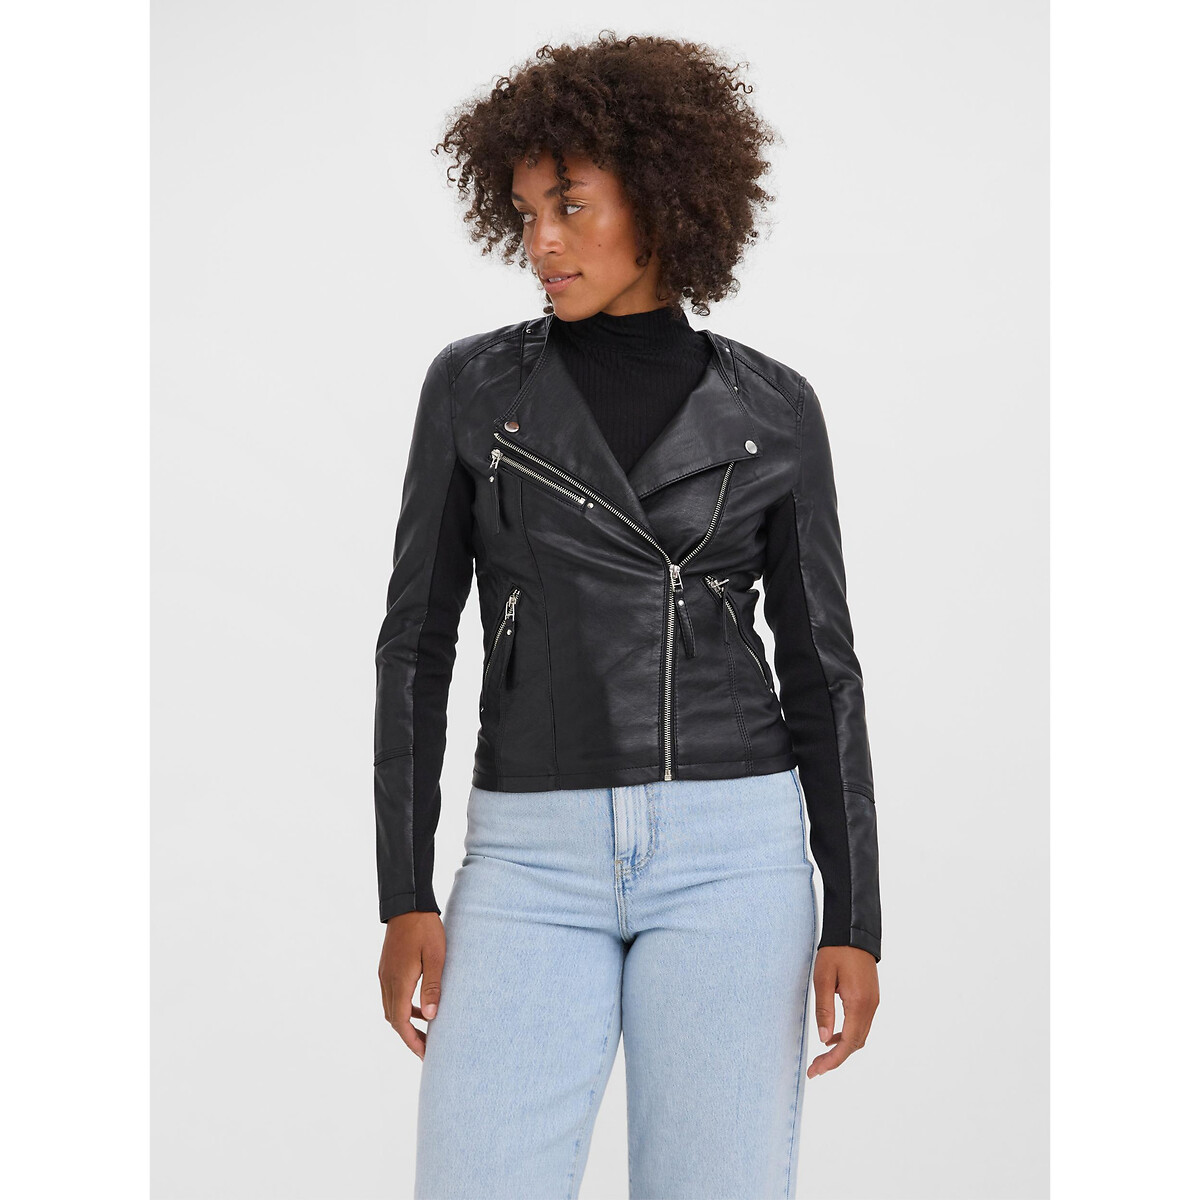 Buy Vero Moda Black Faux Leather PU Jacket from Next USA